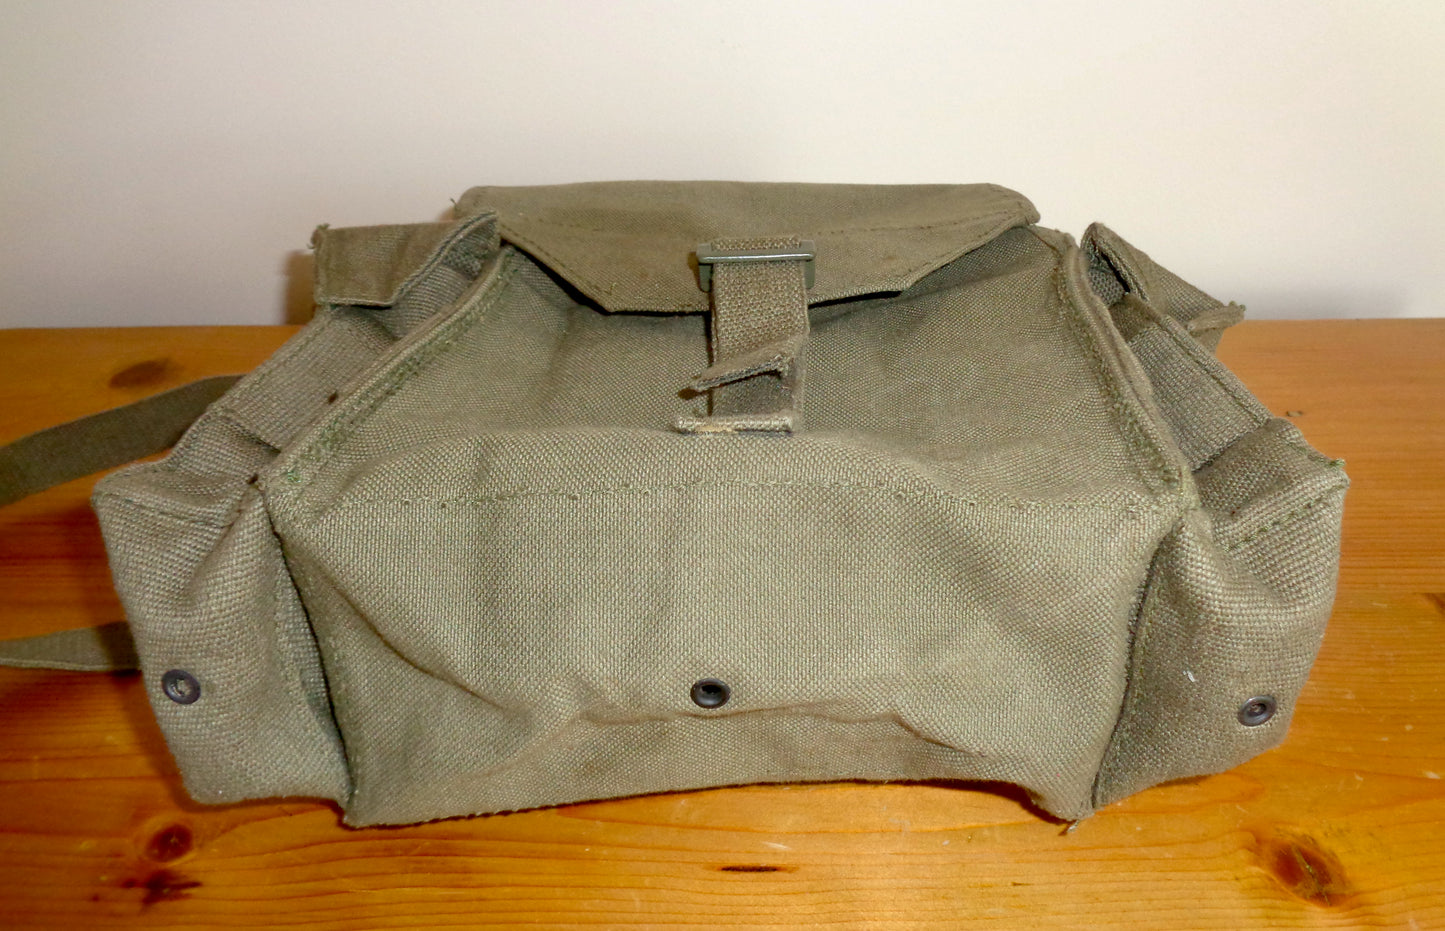 Vintage Military Canvas Shoulder Bag in Khaki Green With Side Pockets